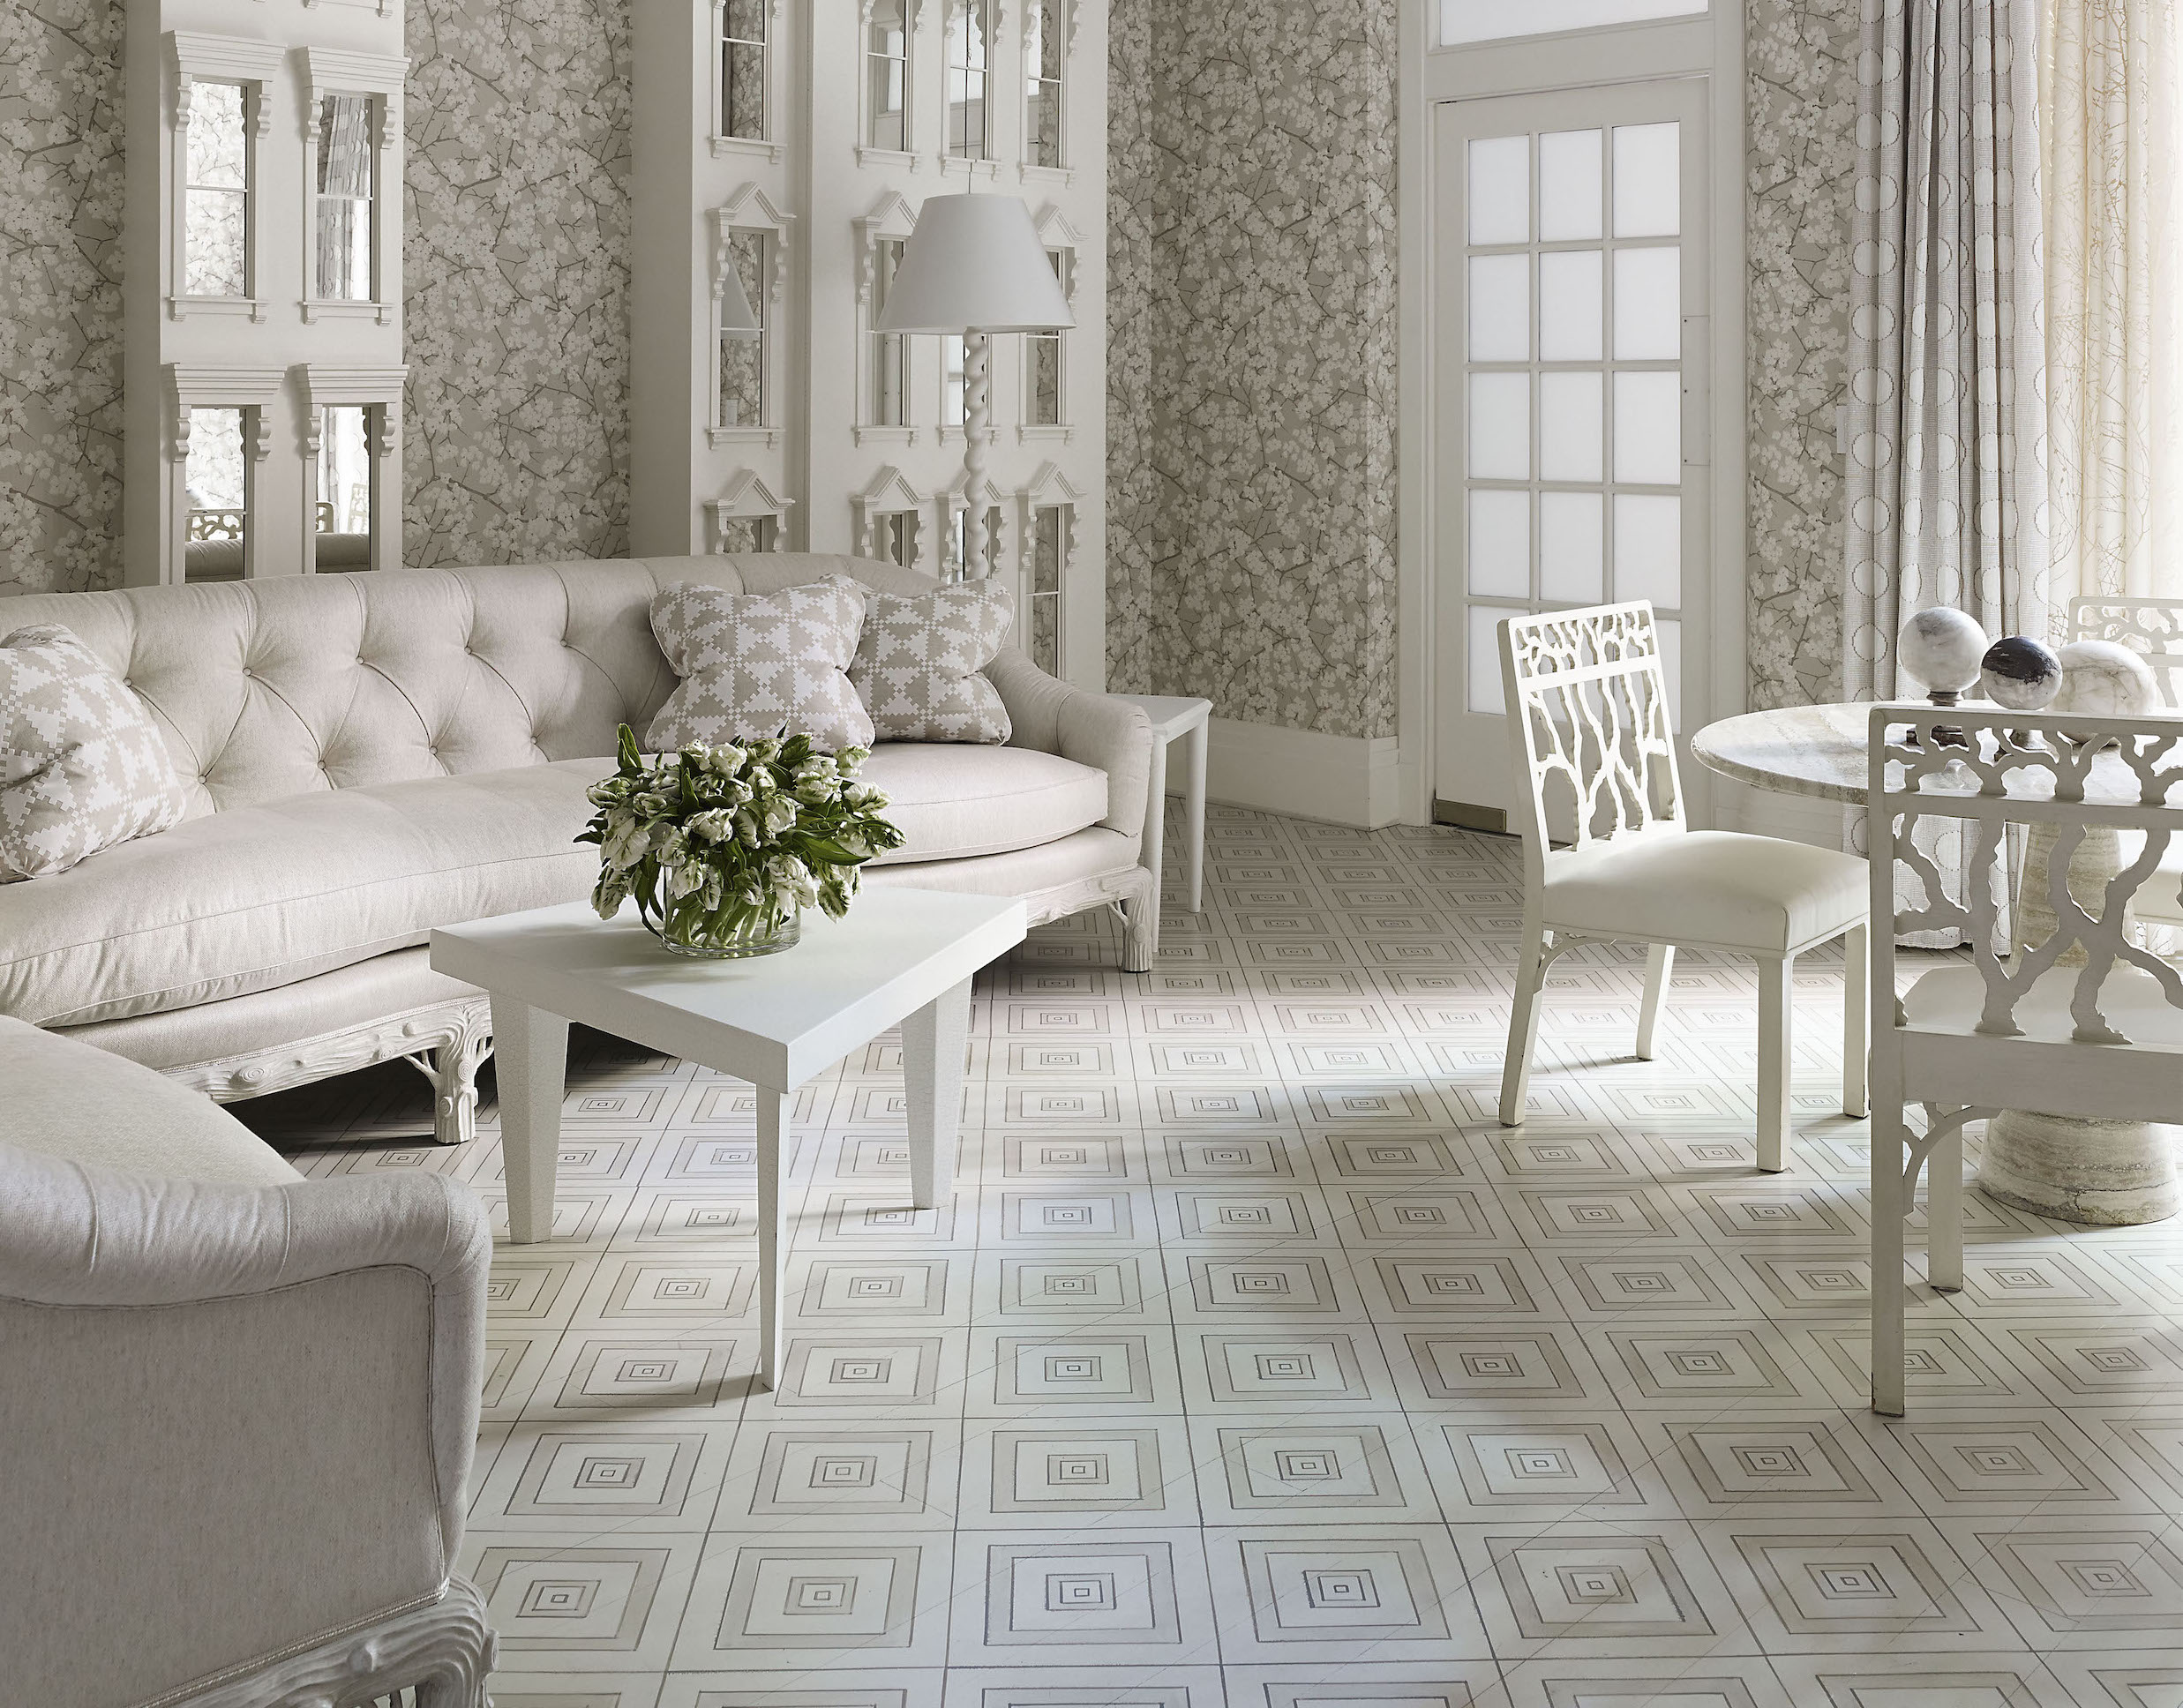 Luxury 20 White Living Room Furniture Ideas - White Chairs and Couches white living room furniture